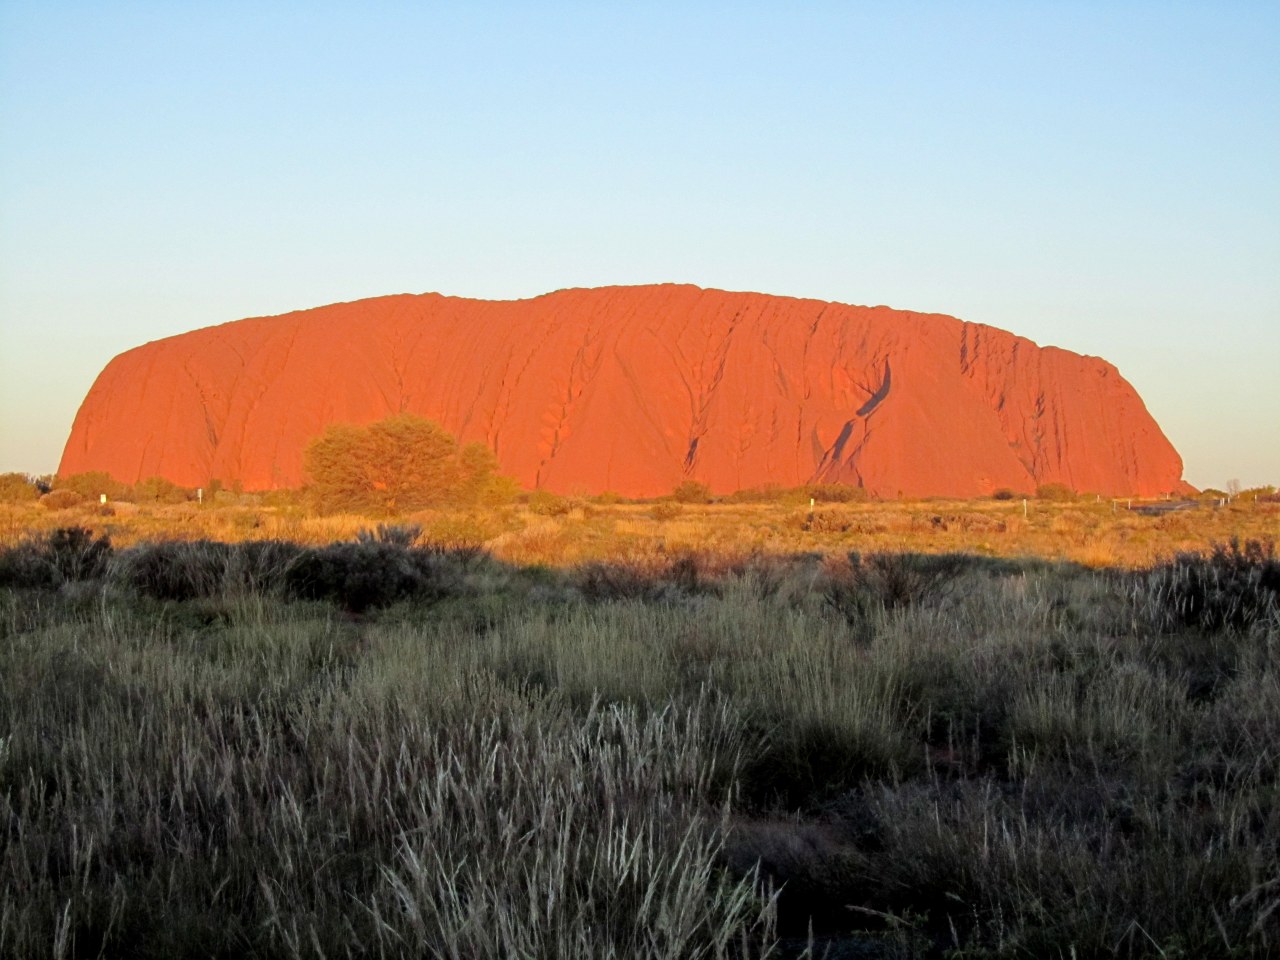 Shades of Uluru